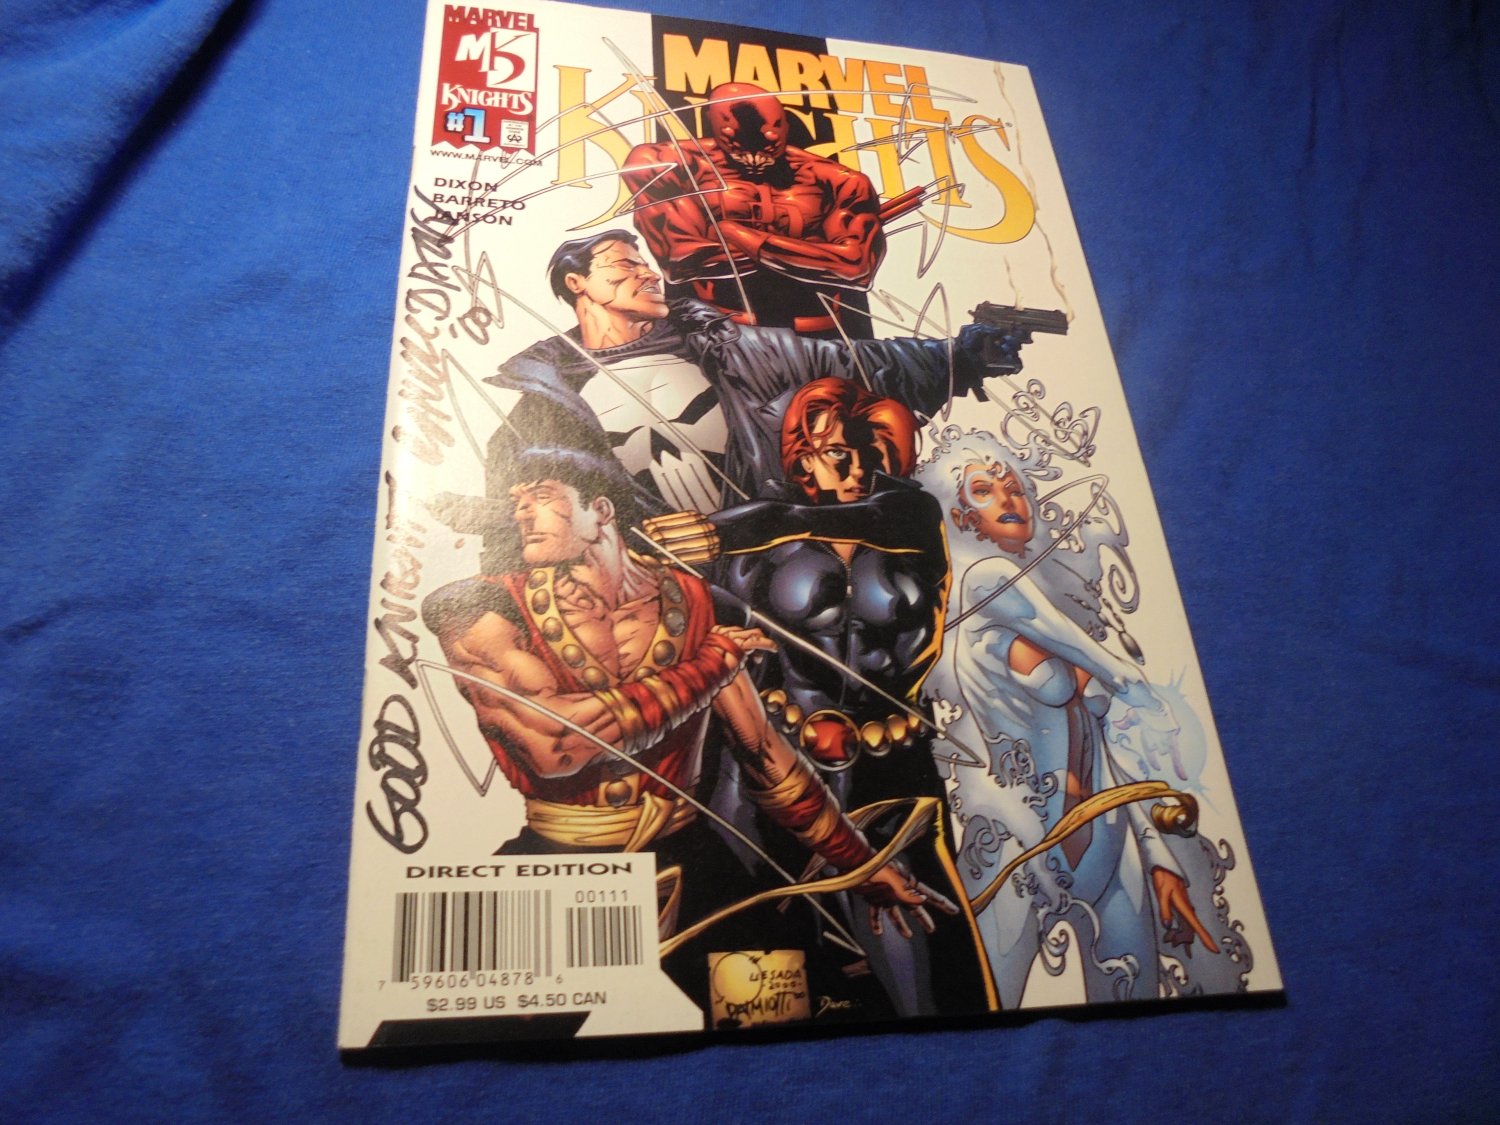 MARVEL KNIGHTS Vol.1, # 1 AUTOGRAPHED by CHUCK DIXON, Marvel Comics, July 2000!! $15.00!